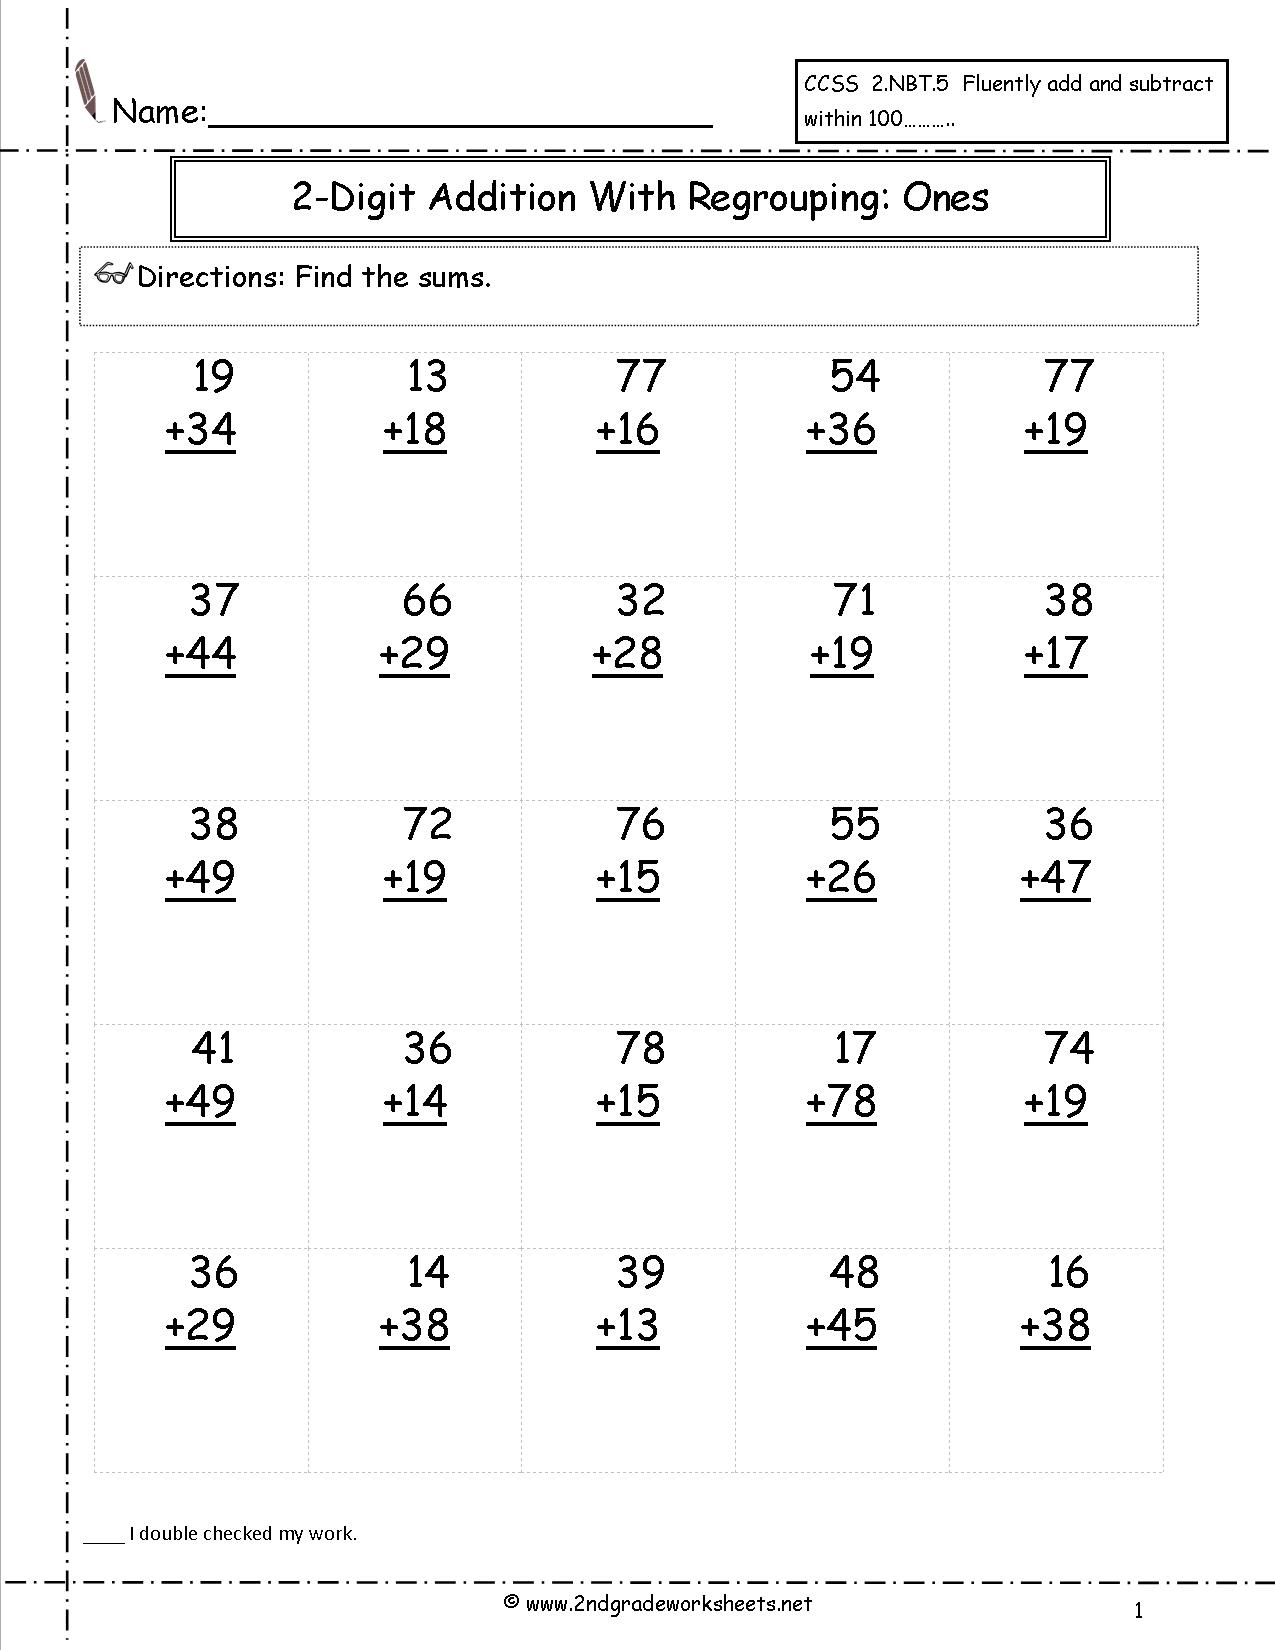 12-best-images-of-triple-digit-multiplication-worksheets-2-multiplication-worksheets-triple